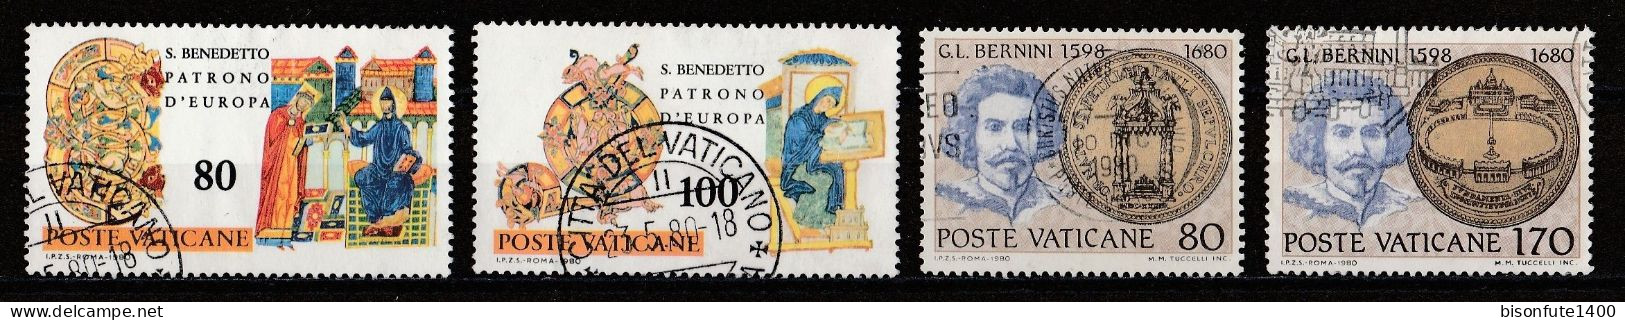 Vatican 1980 : Timbres Yvert & Tellier N° 689 - 690 - 694 - 695 - 696 - 698 - 699 - 700 Et 701 Oblitérés. - Used Stamps